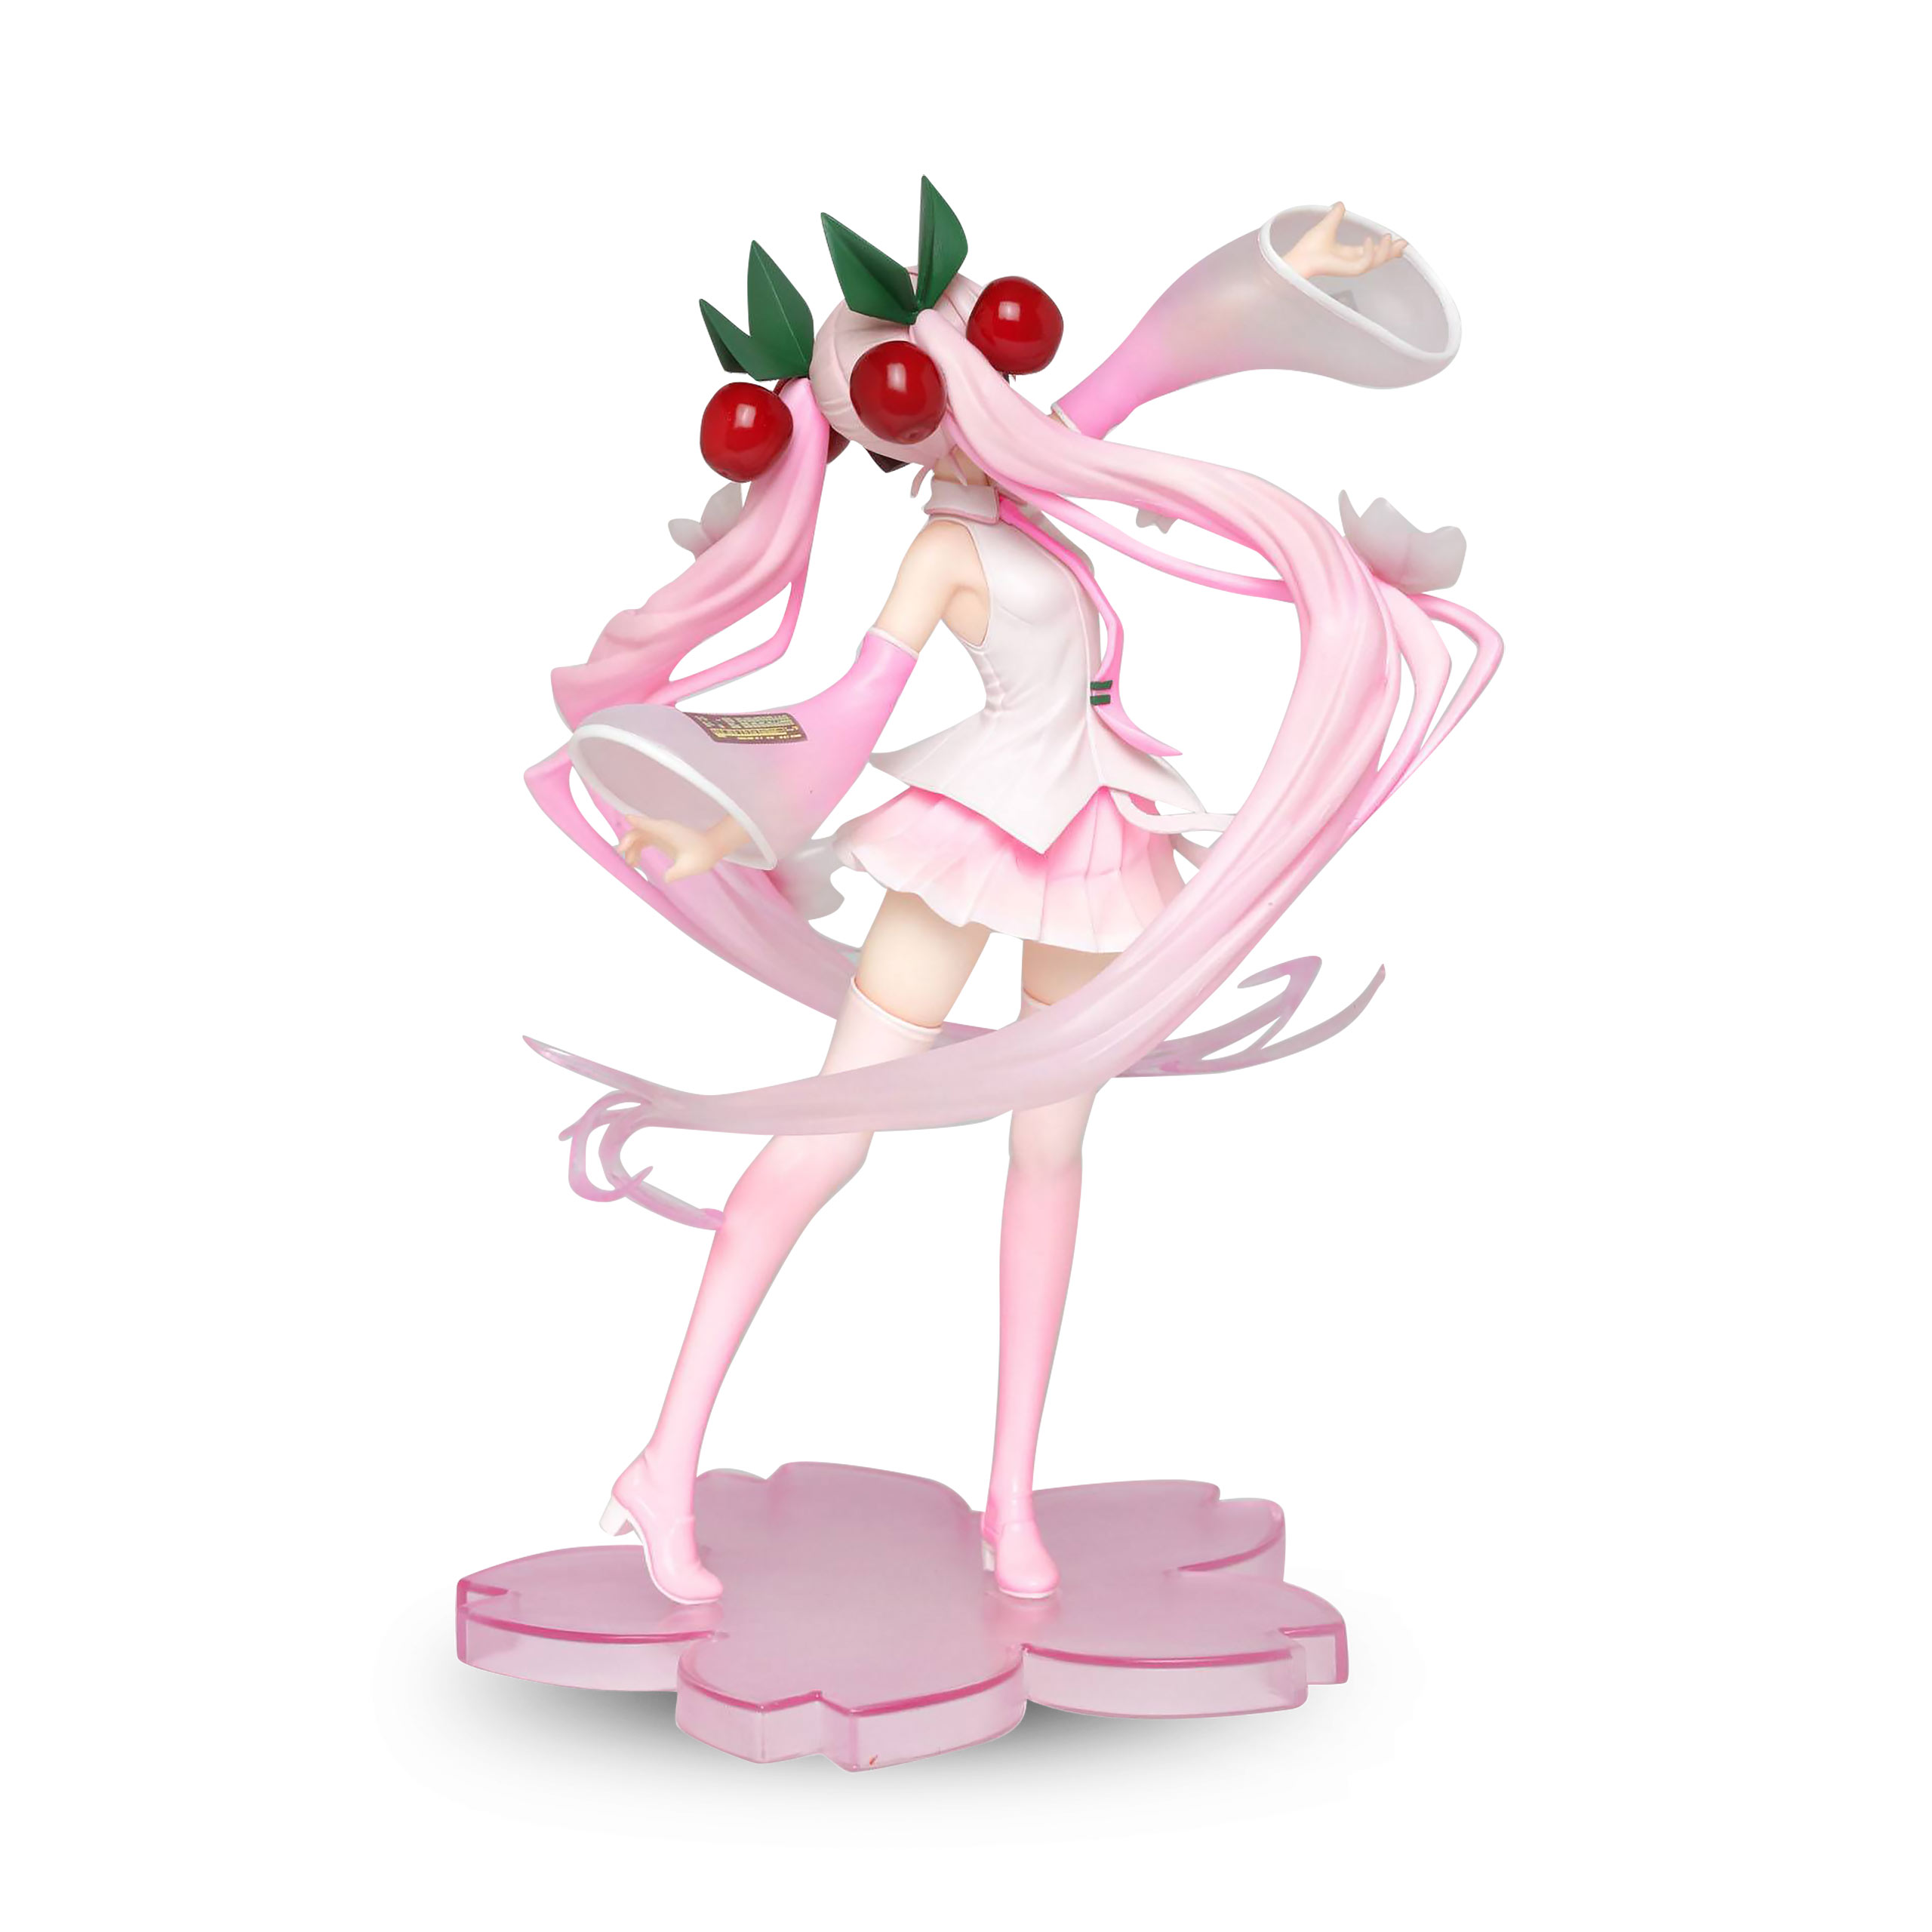 Hatsune Miku - Sakura Miku Nouvellement Ecrite 2020 Ver. Figurine